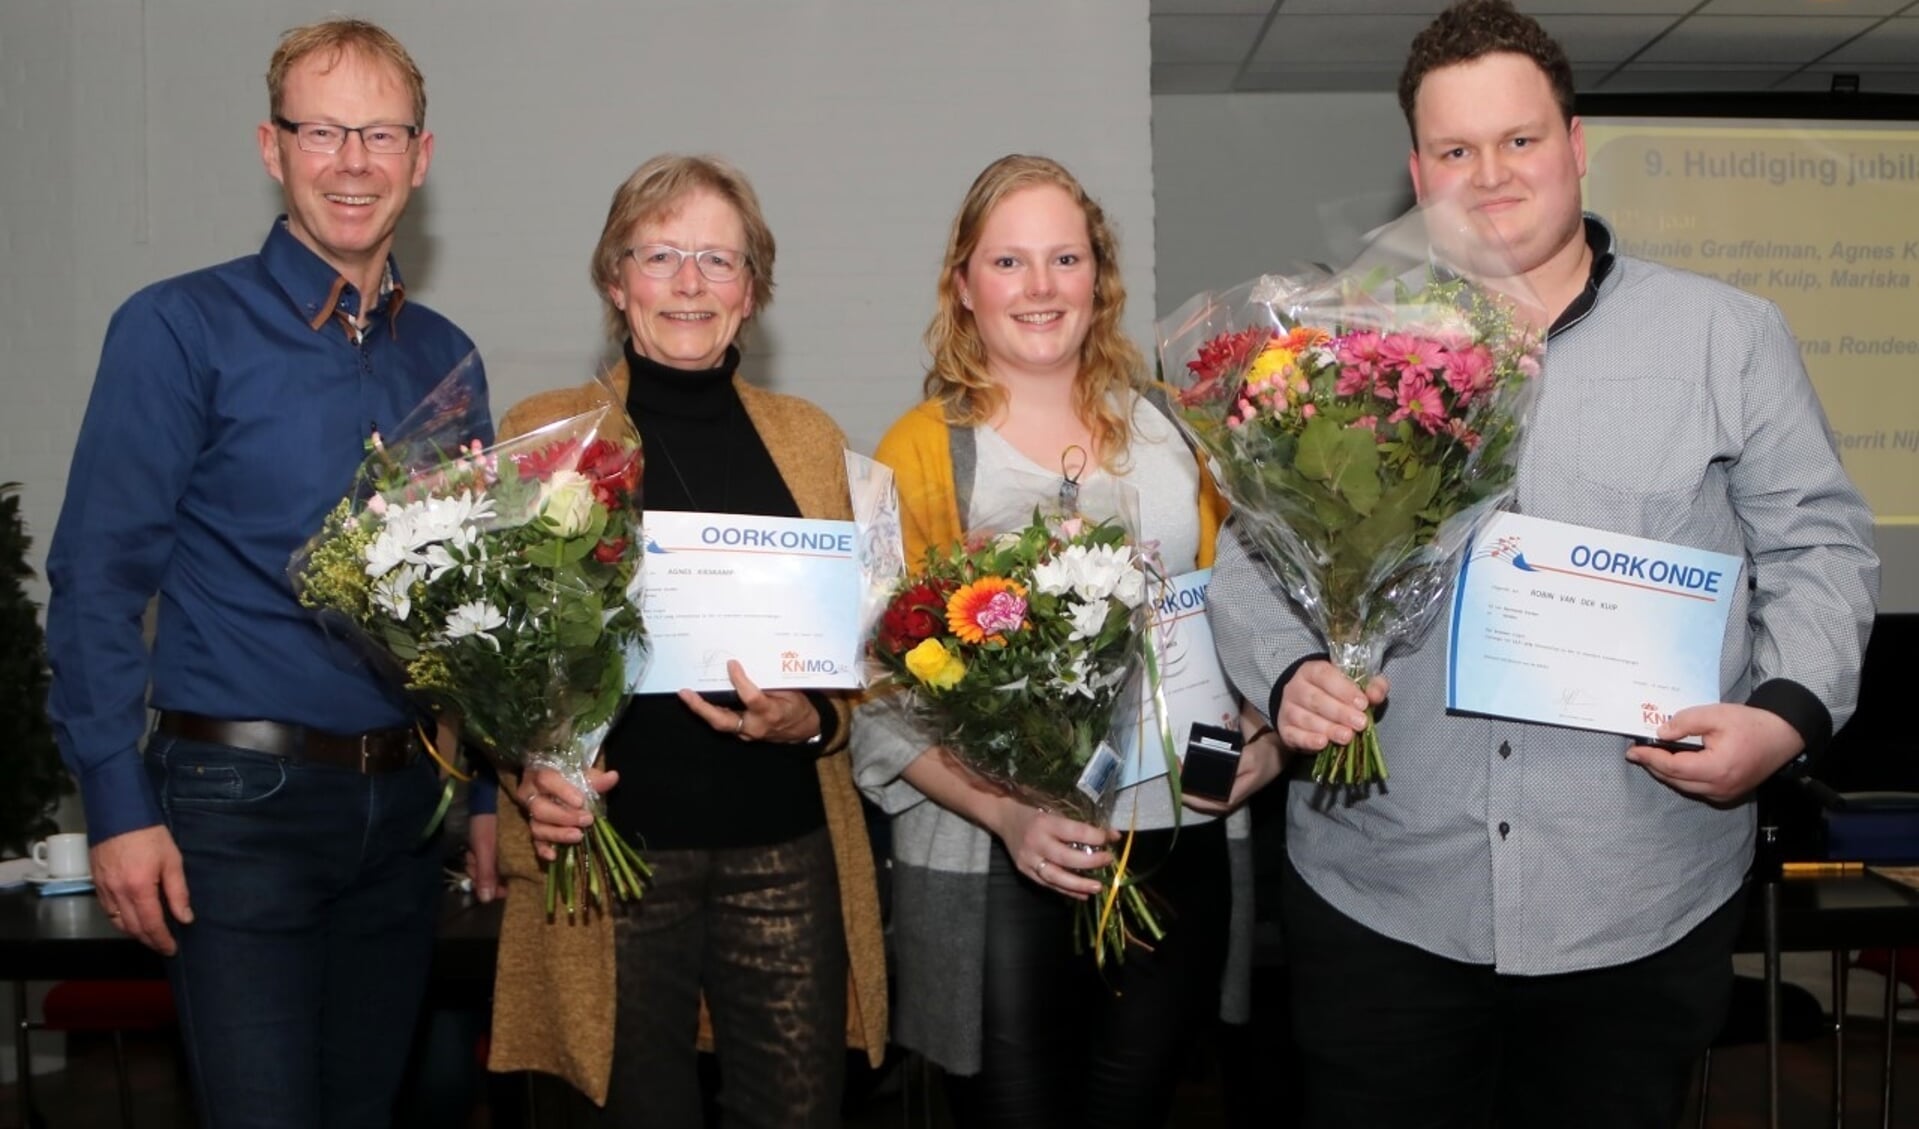 V.l.n.r.: Voorzitter Erwin Sportel, Agnes Kieskamp, Melanie Graffelman en Robin van der Kuip. Foto: Rob Schmitz 